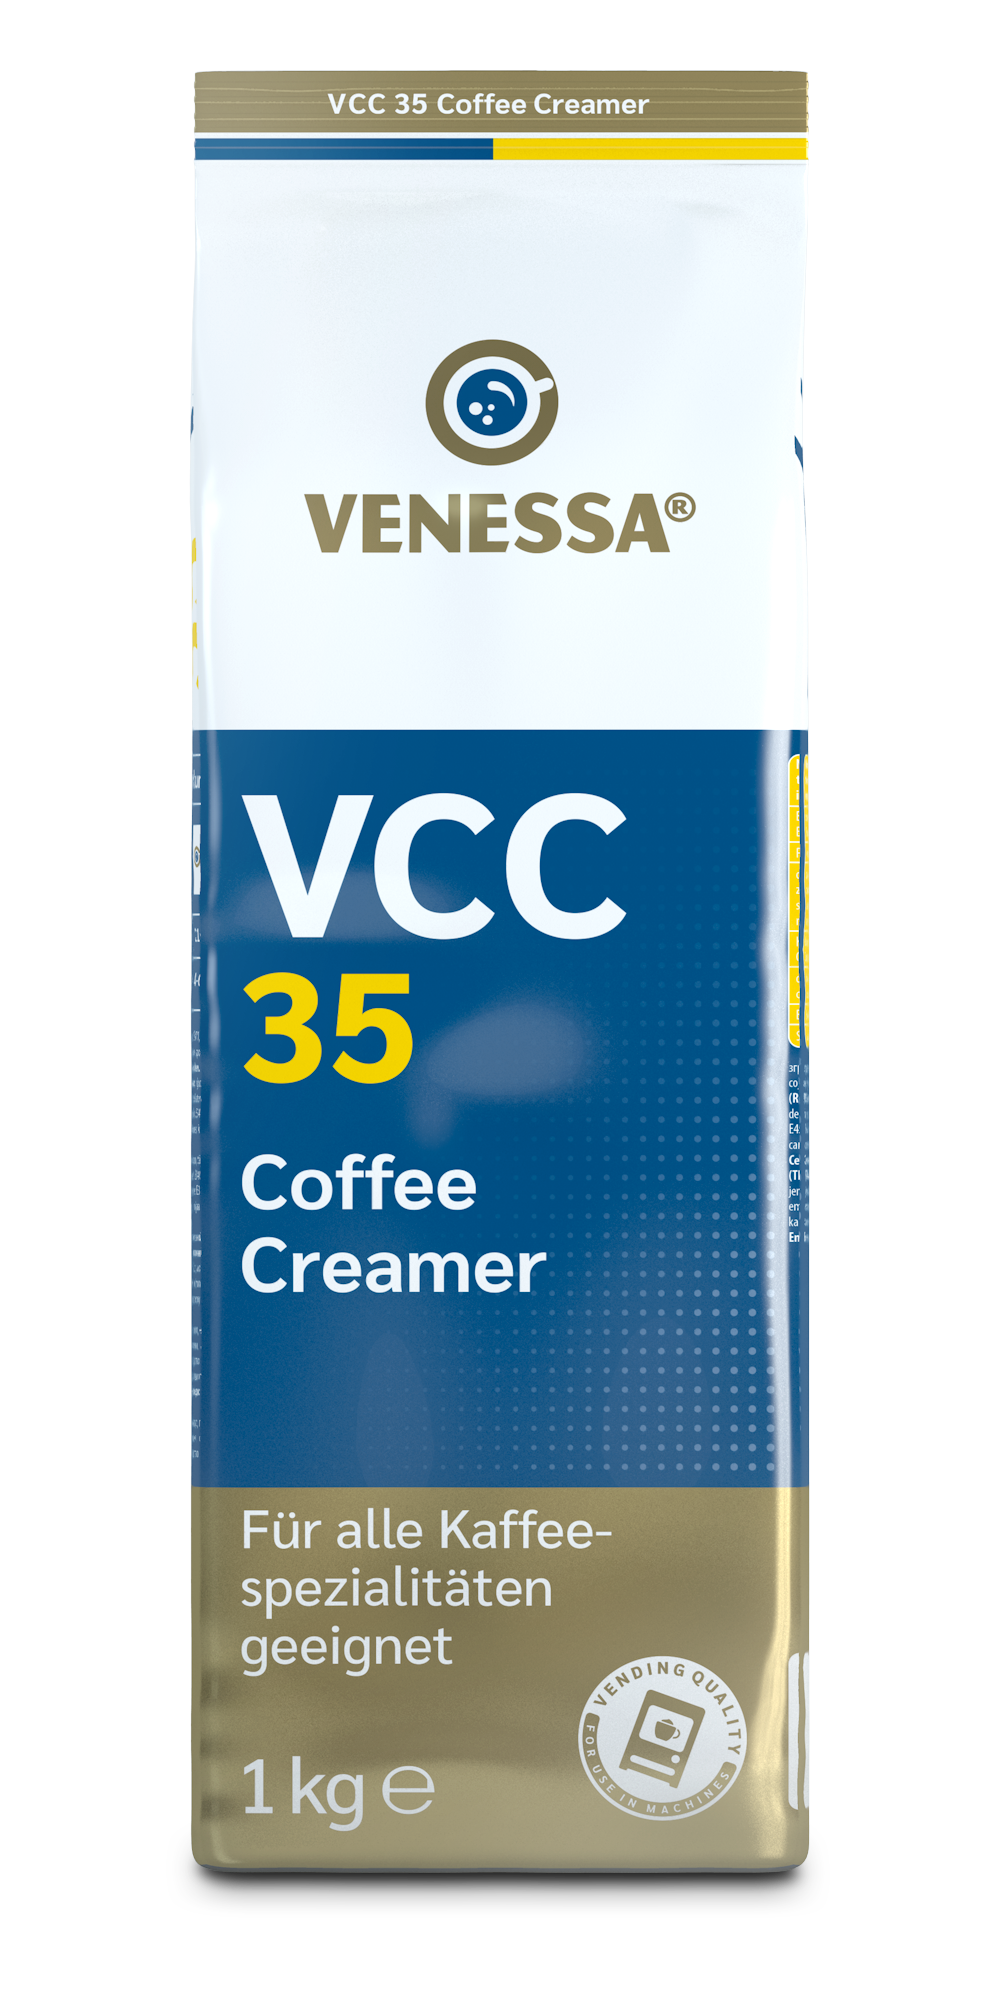 VENESSA VCC 35 Kaffeeweißer Coffee Creamer 5x 1kg 